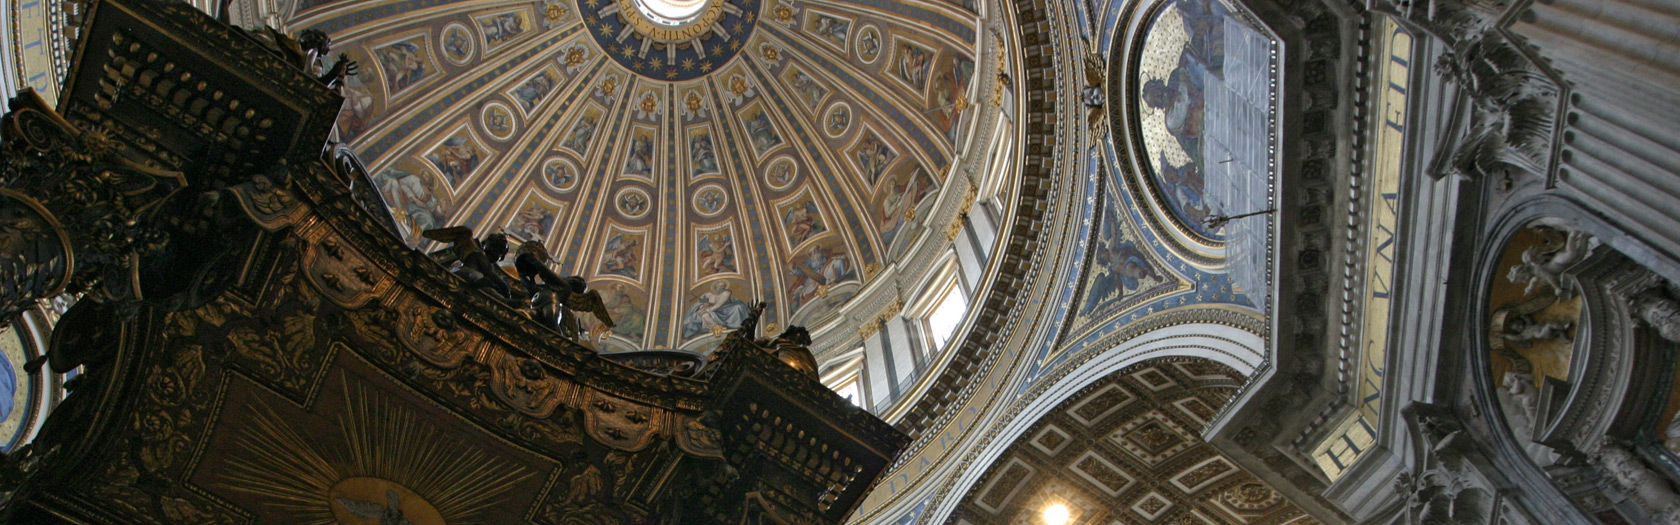 Inside St. Peter's Basilika